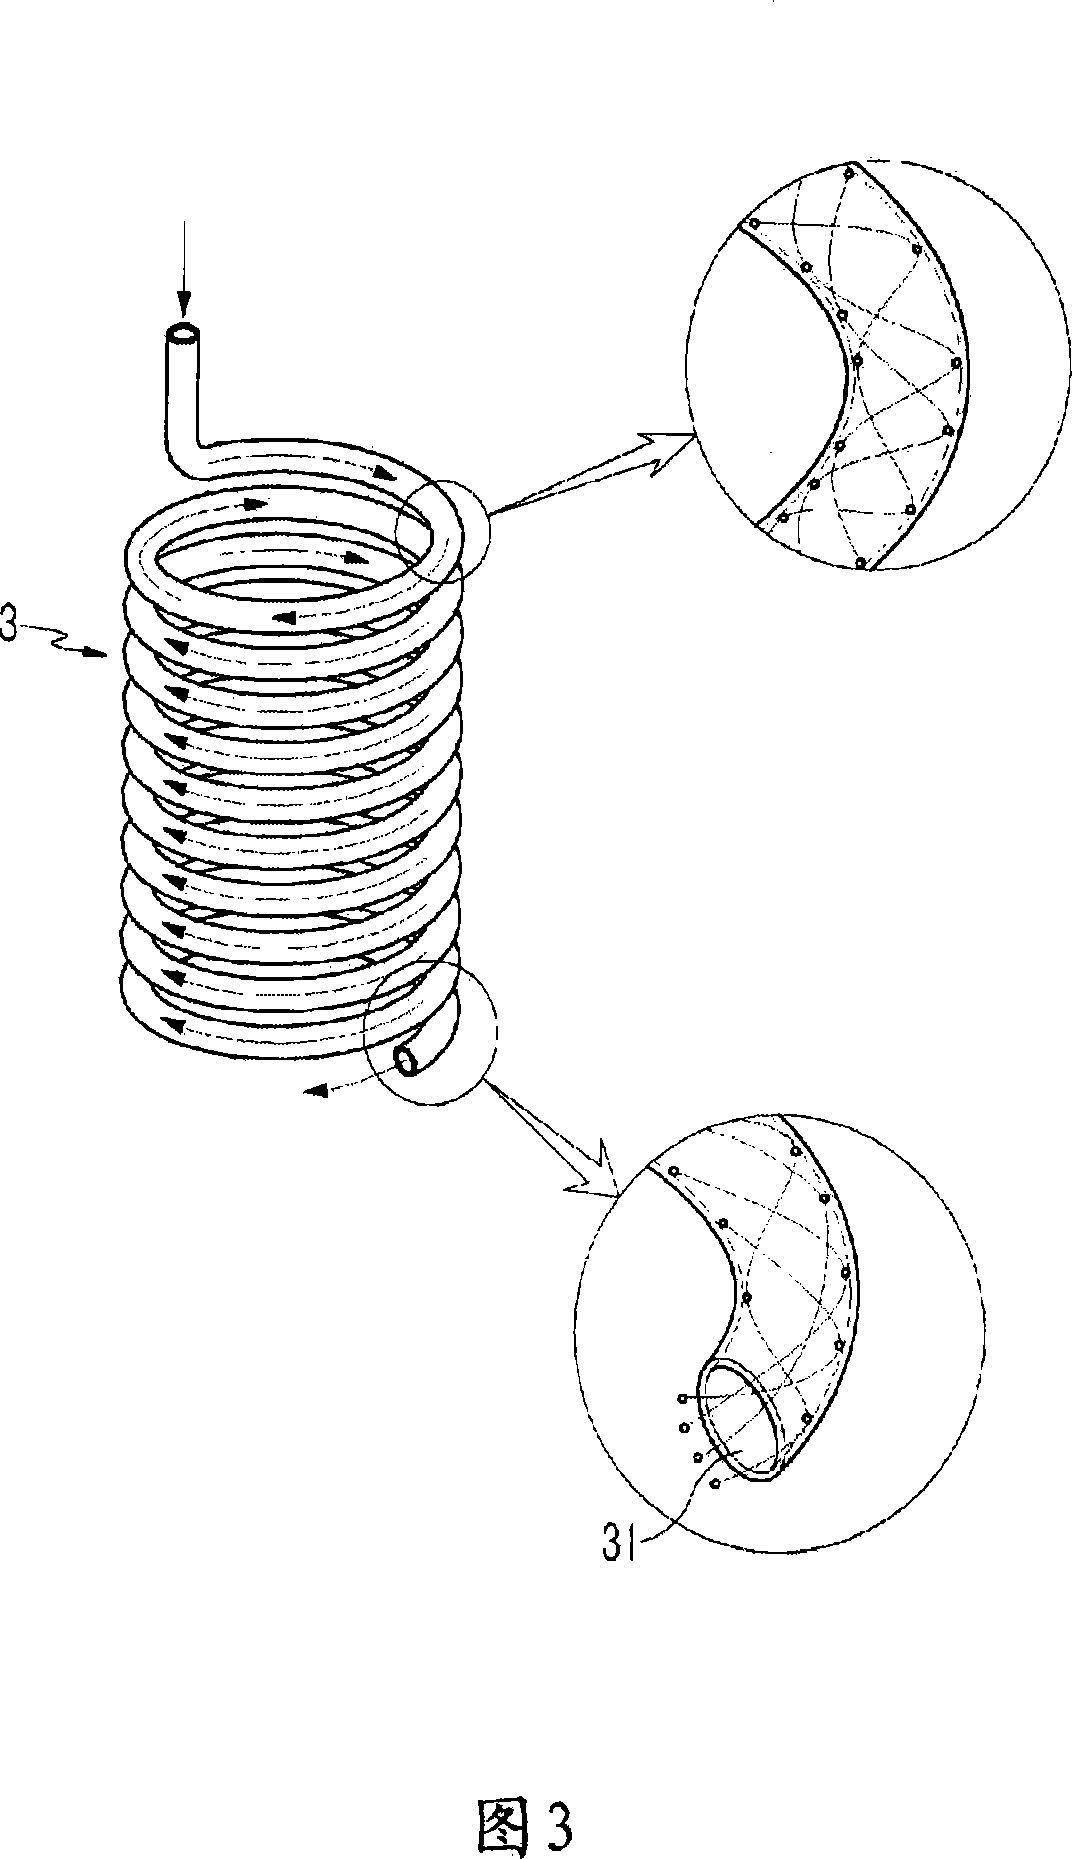 Gas combustion arrangement using circular stream